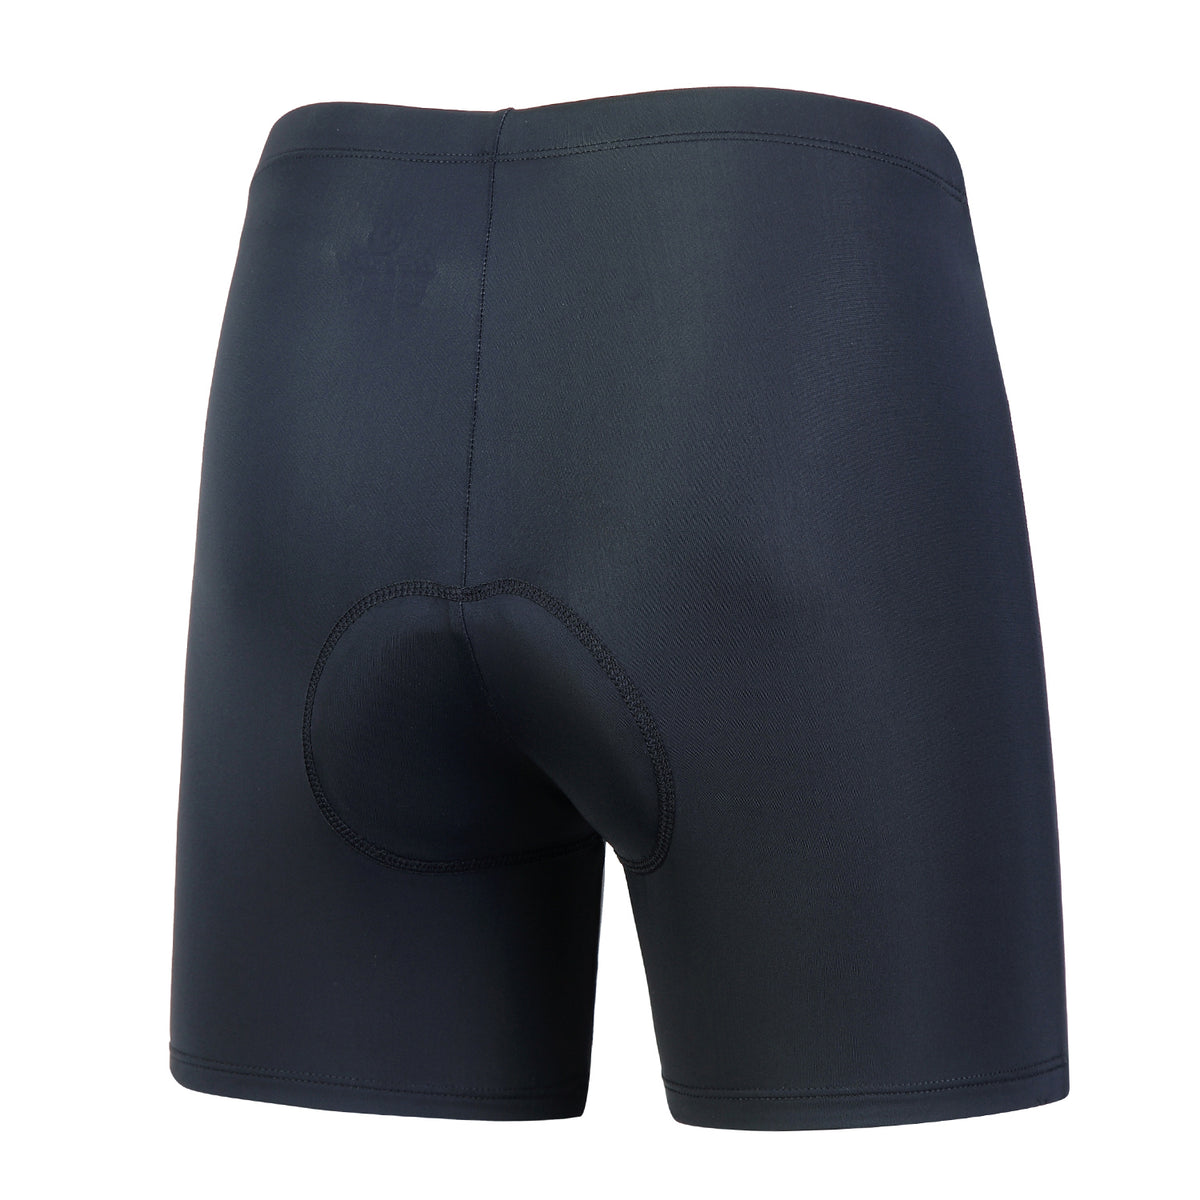 Generic Women's Cycling Underwear 3D Padded Bike Shorts Road Biking M Black  @ Best Price Online